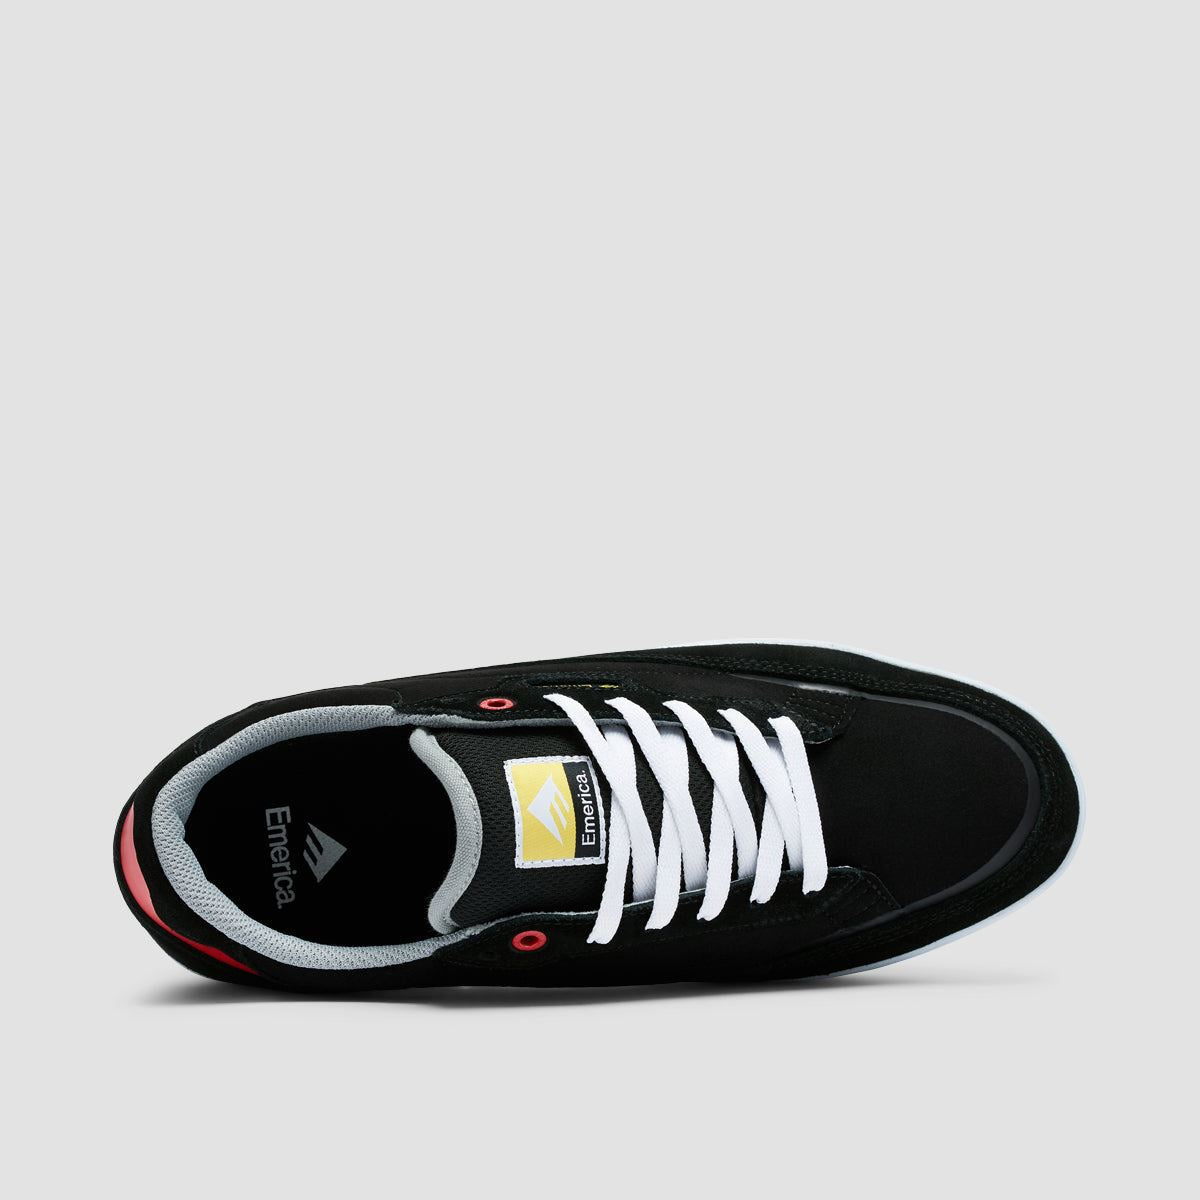 Emerica Gamma Shoes Black/White/Red